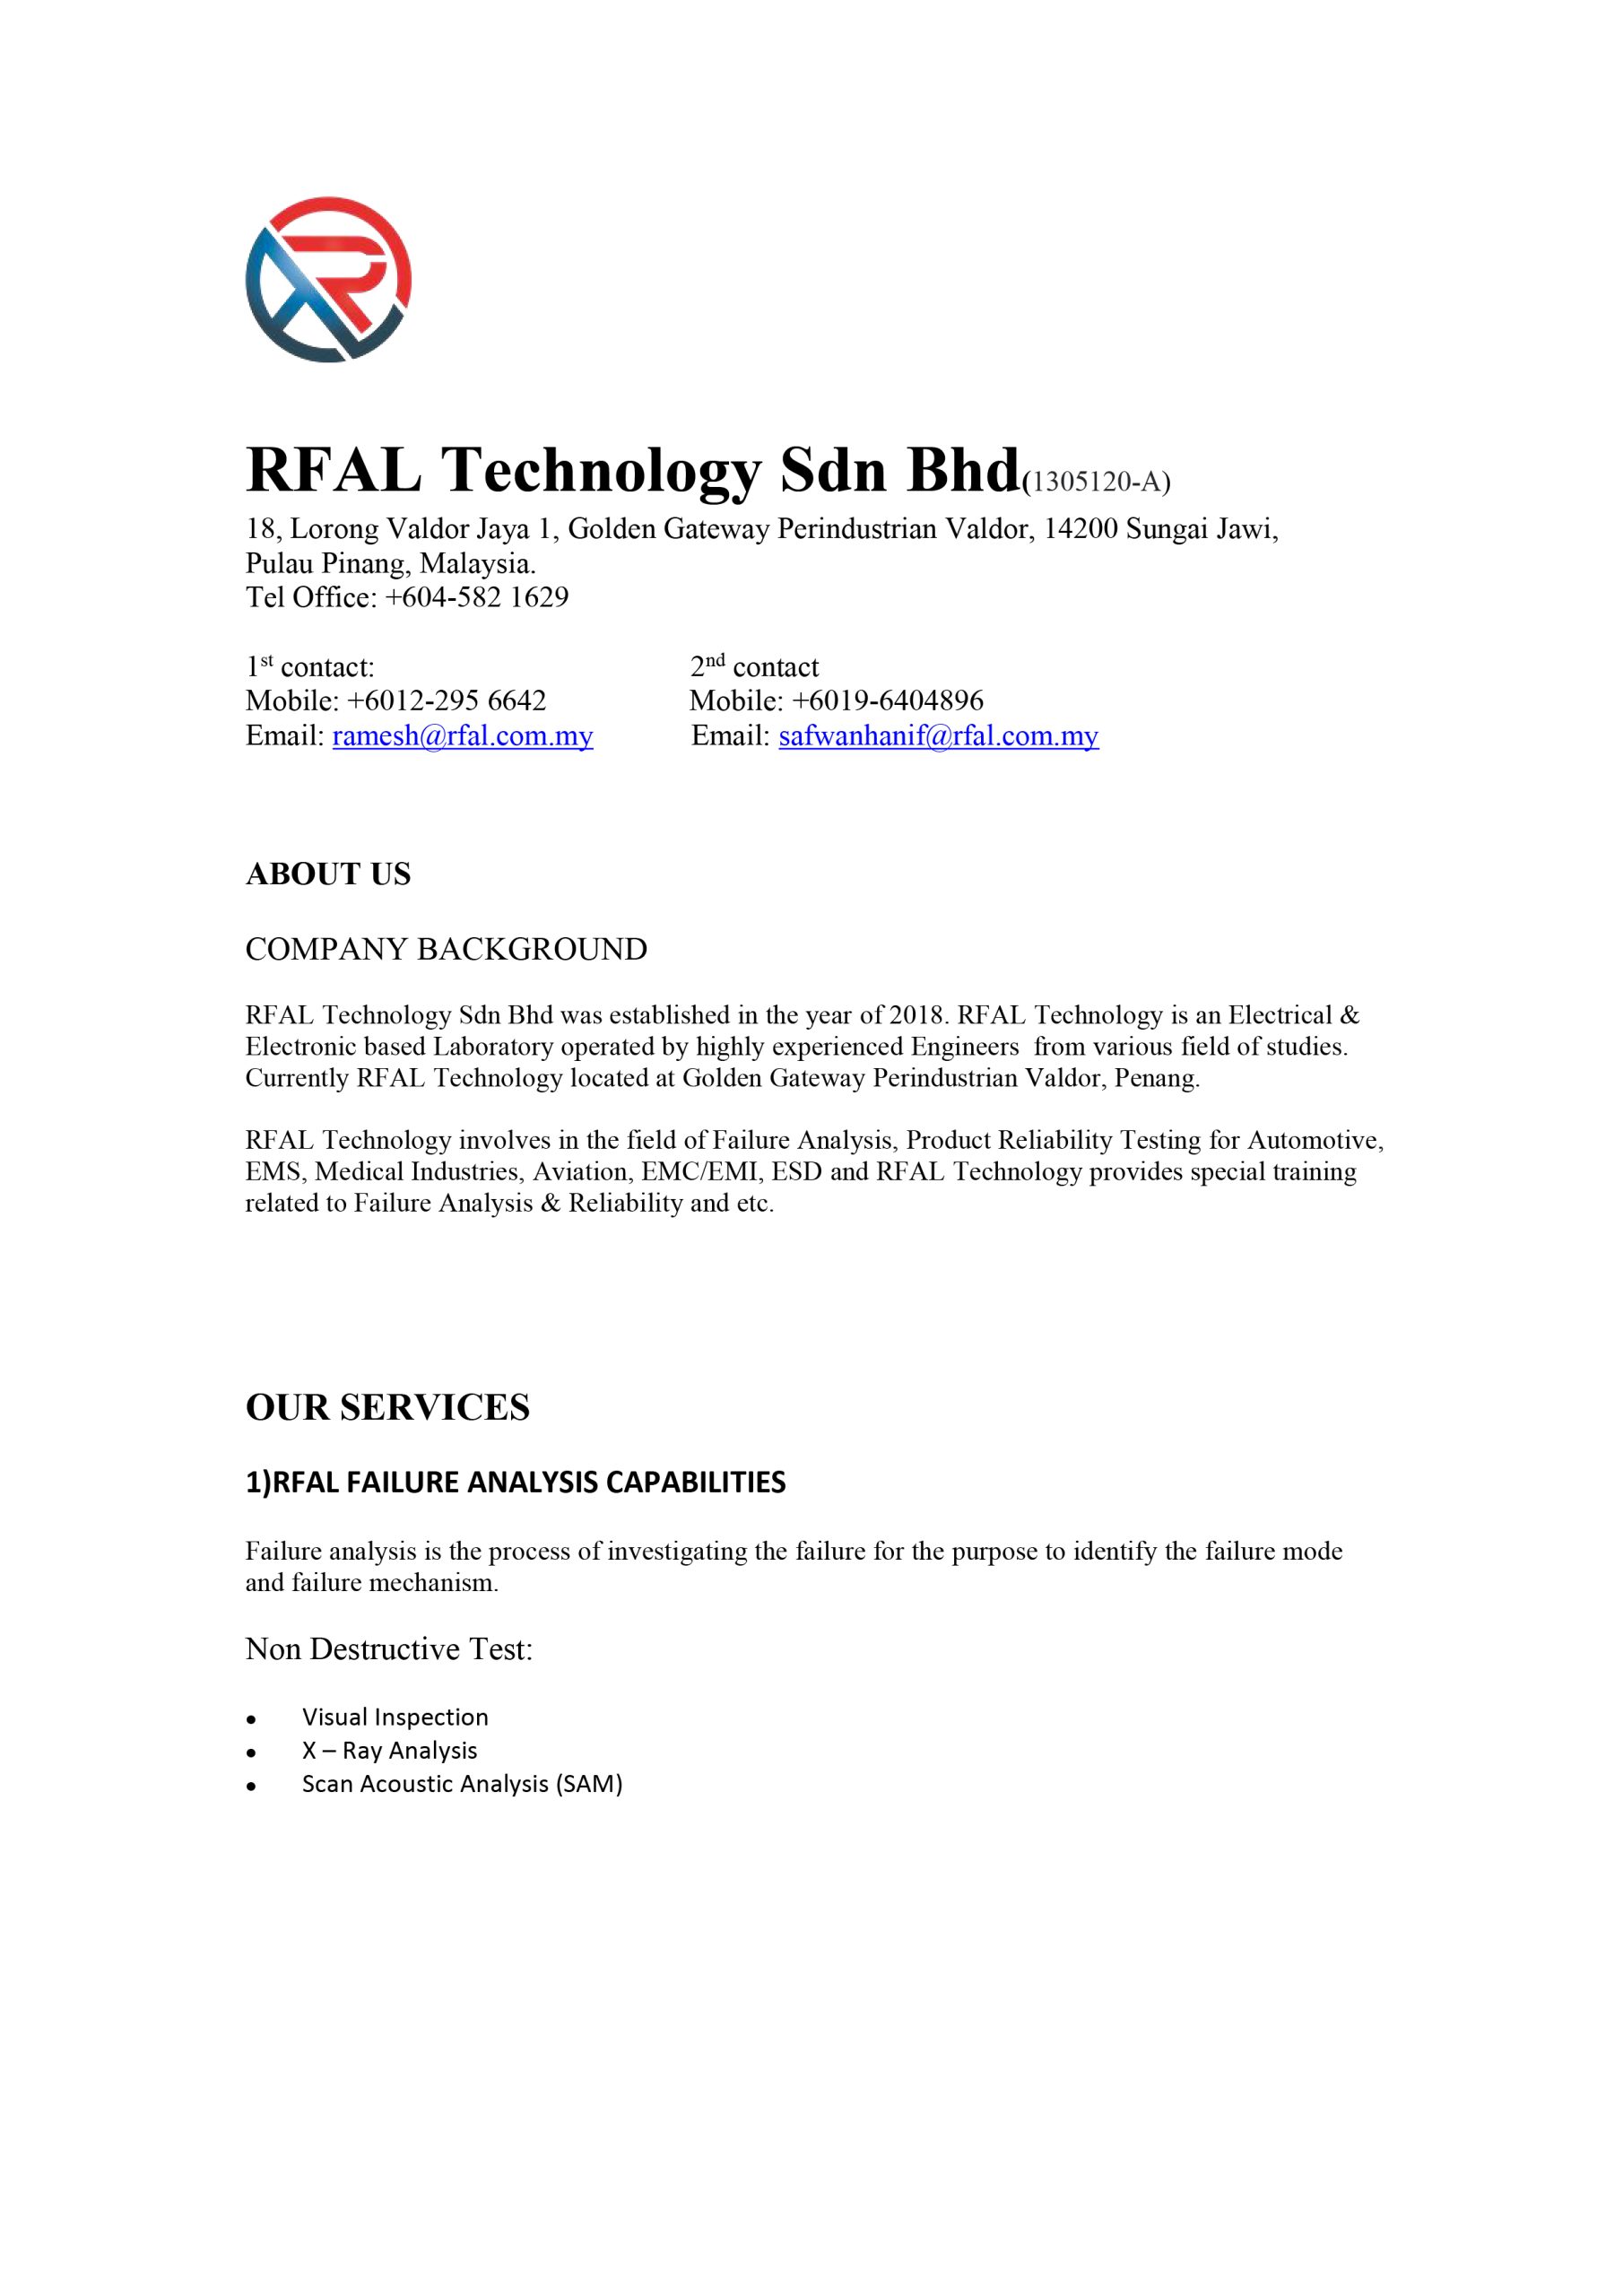 RFAL TECHNOLOGY SDN BHD